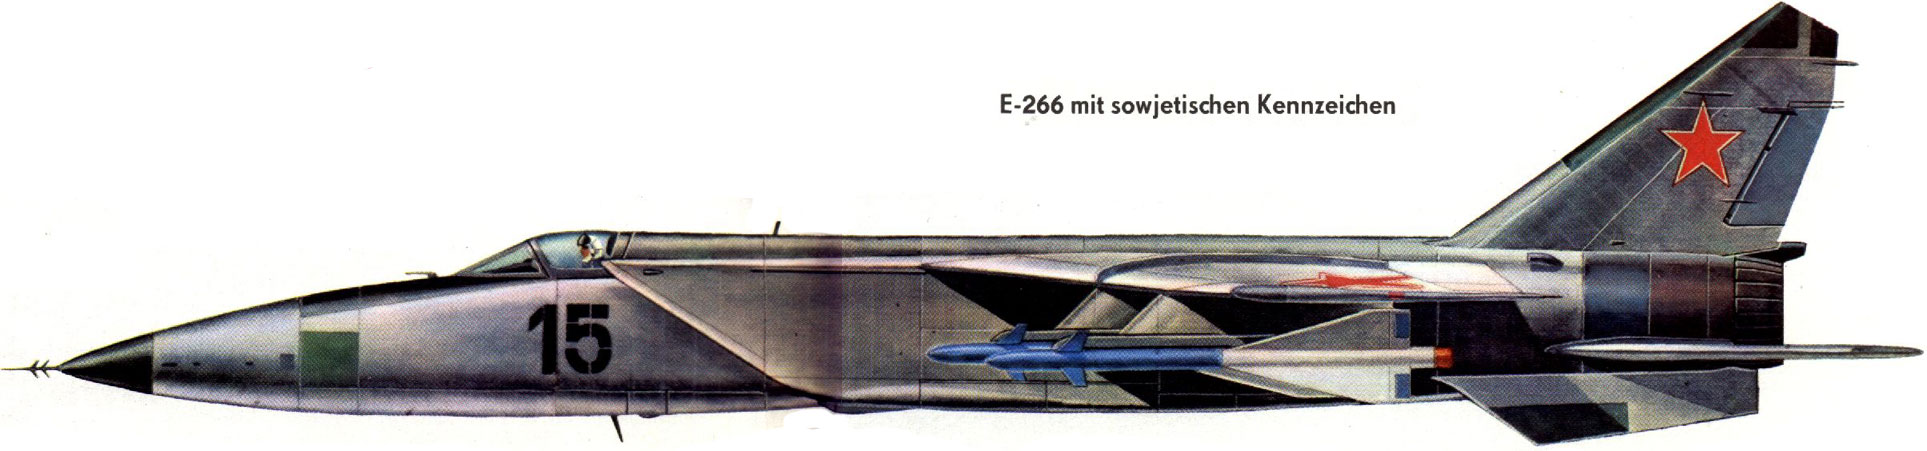 MIG-25 Foxbat (12)